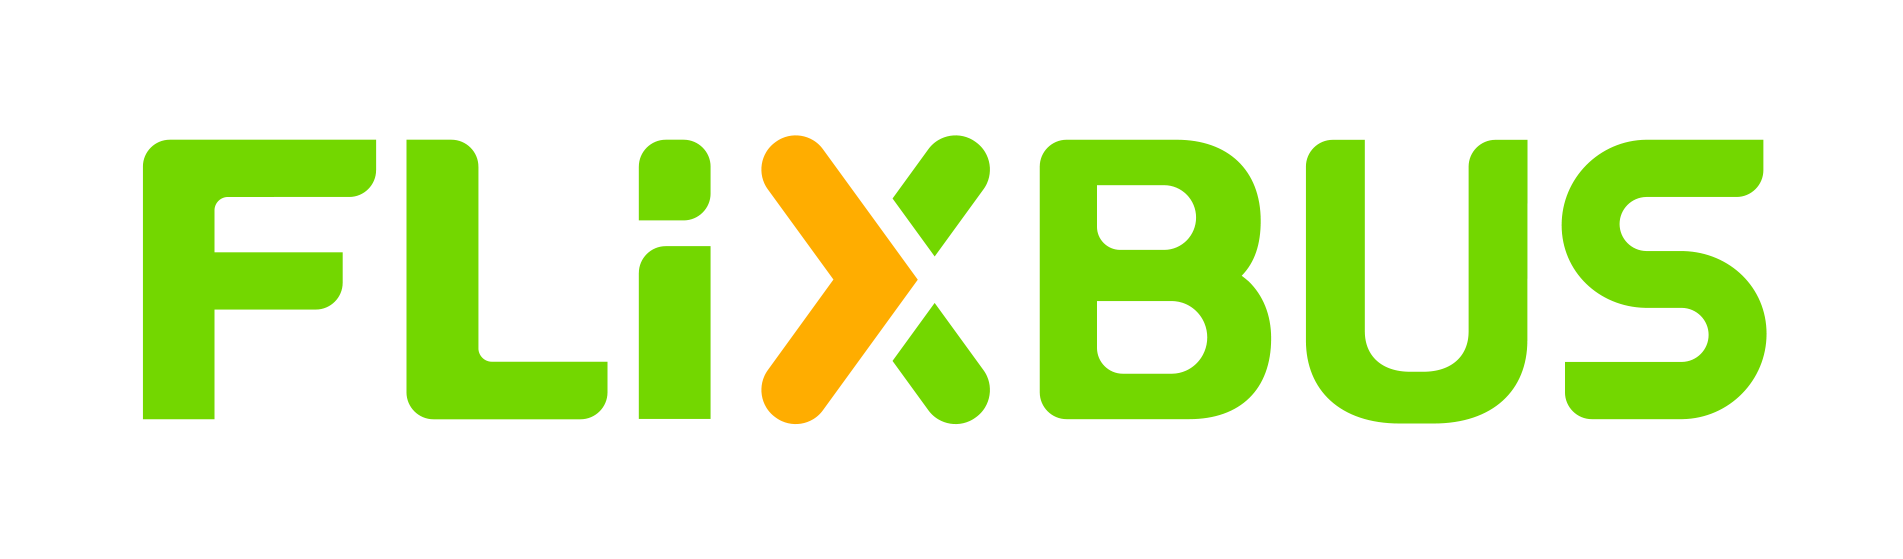 Logo of Flixbus bus company